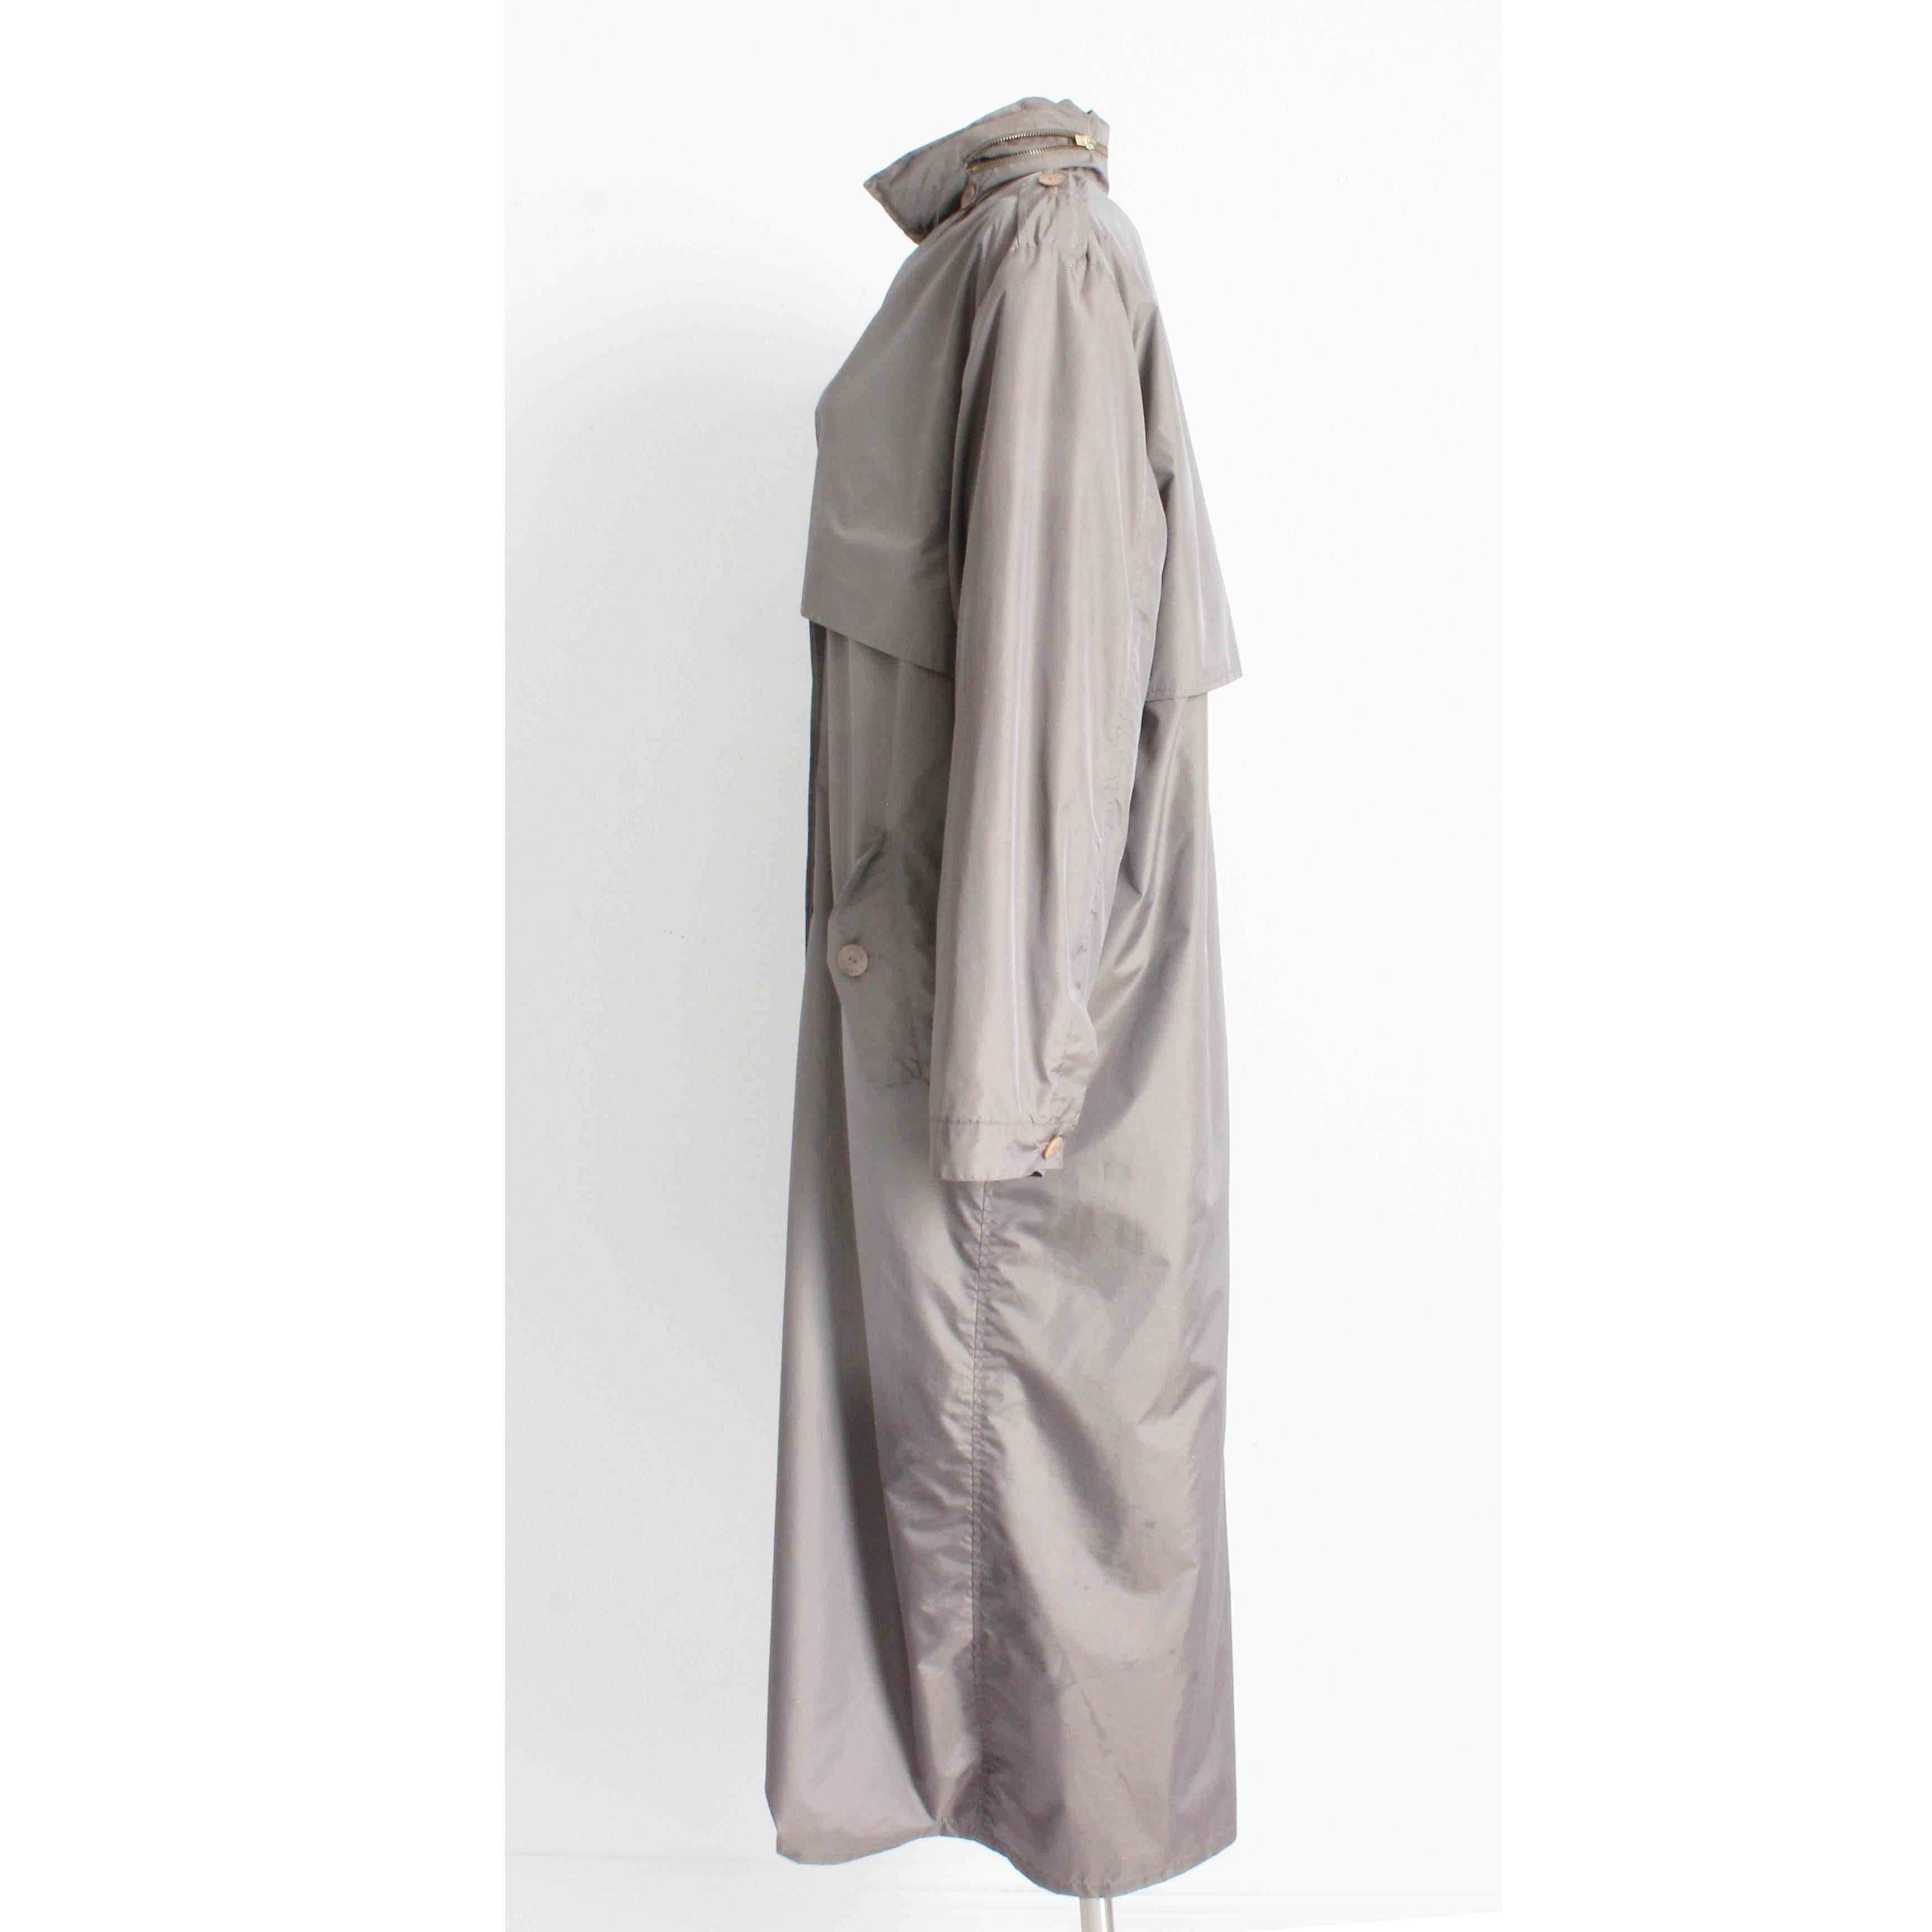 Sonia Rykiel Paris Rain Coat Trench Coat with Hood Lined Vintage 1990s  For Sale 3